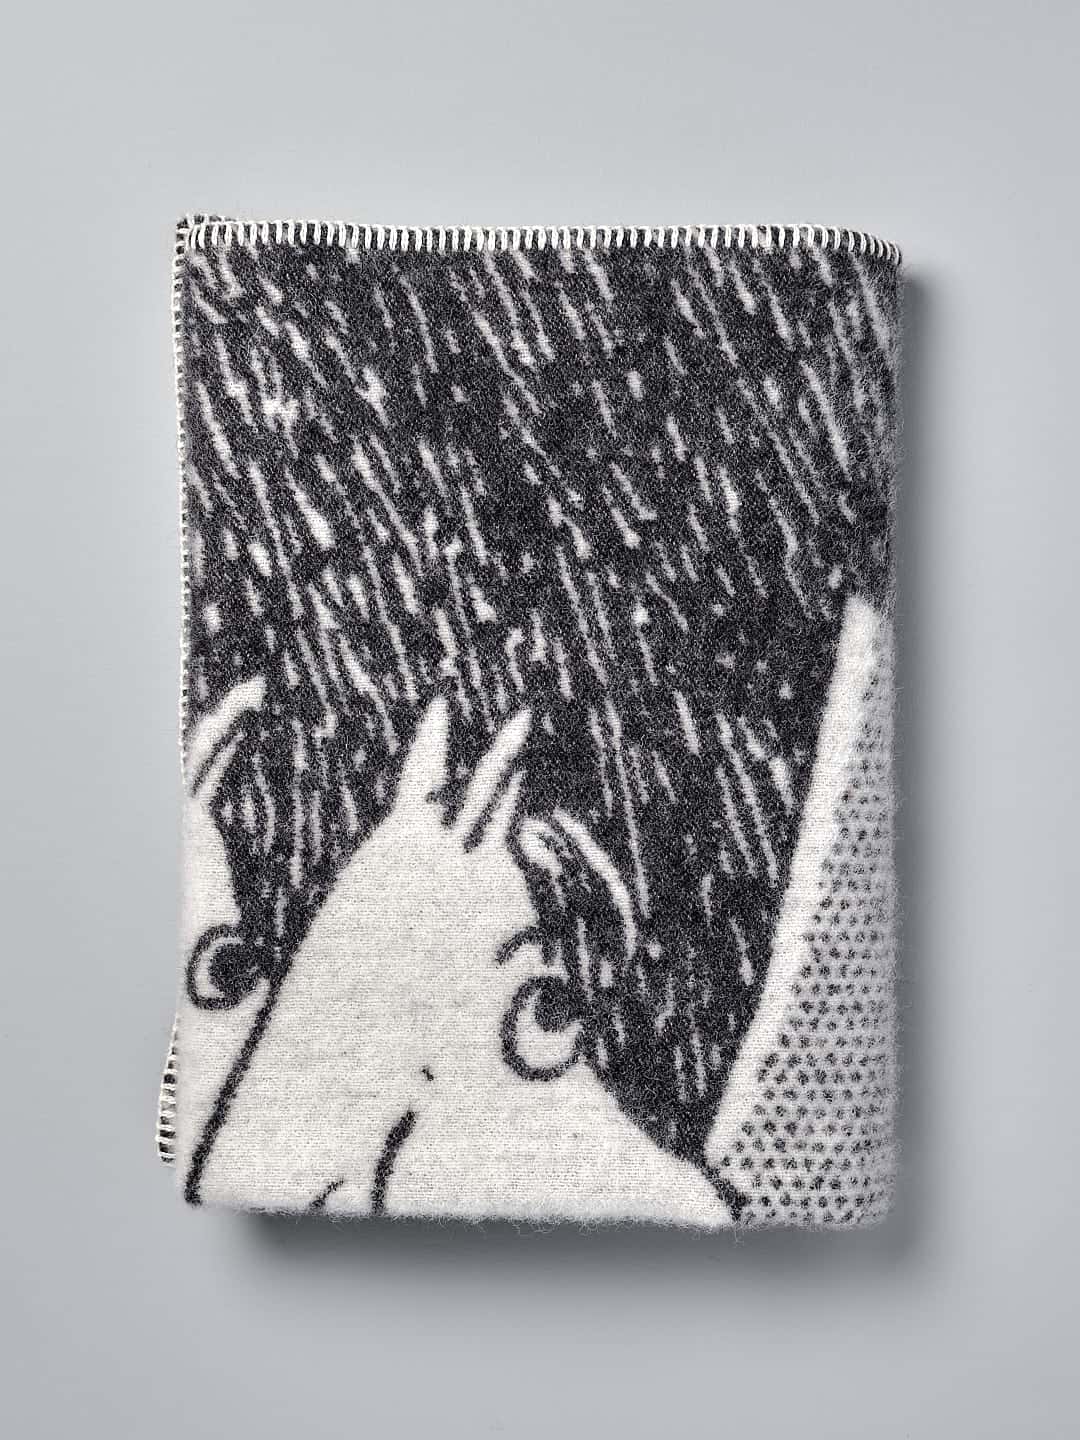 Klippan Moomin Childs Blanket – Camp Adventure - black and white.